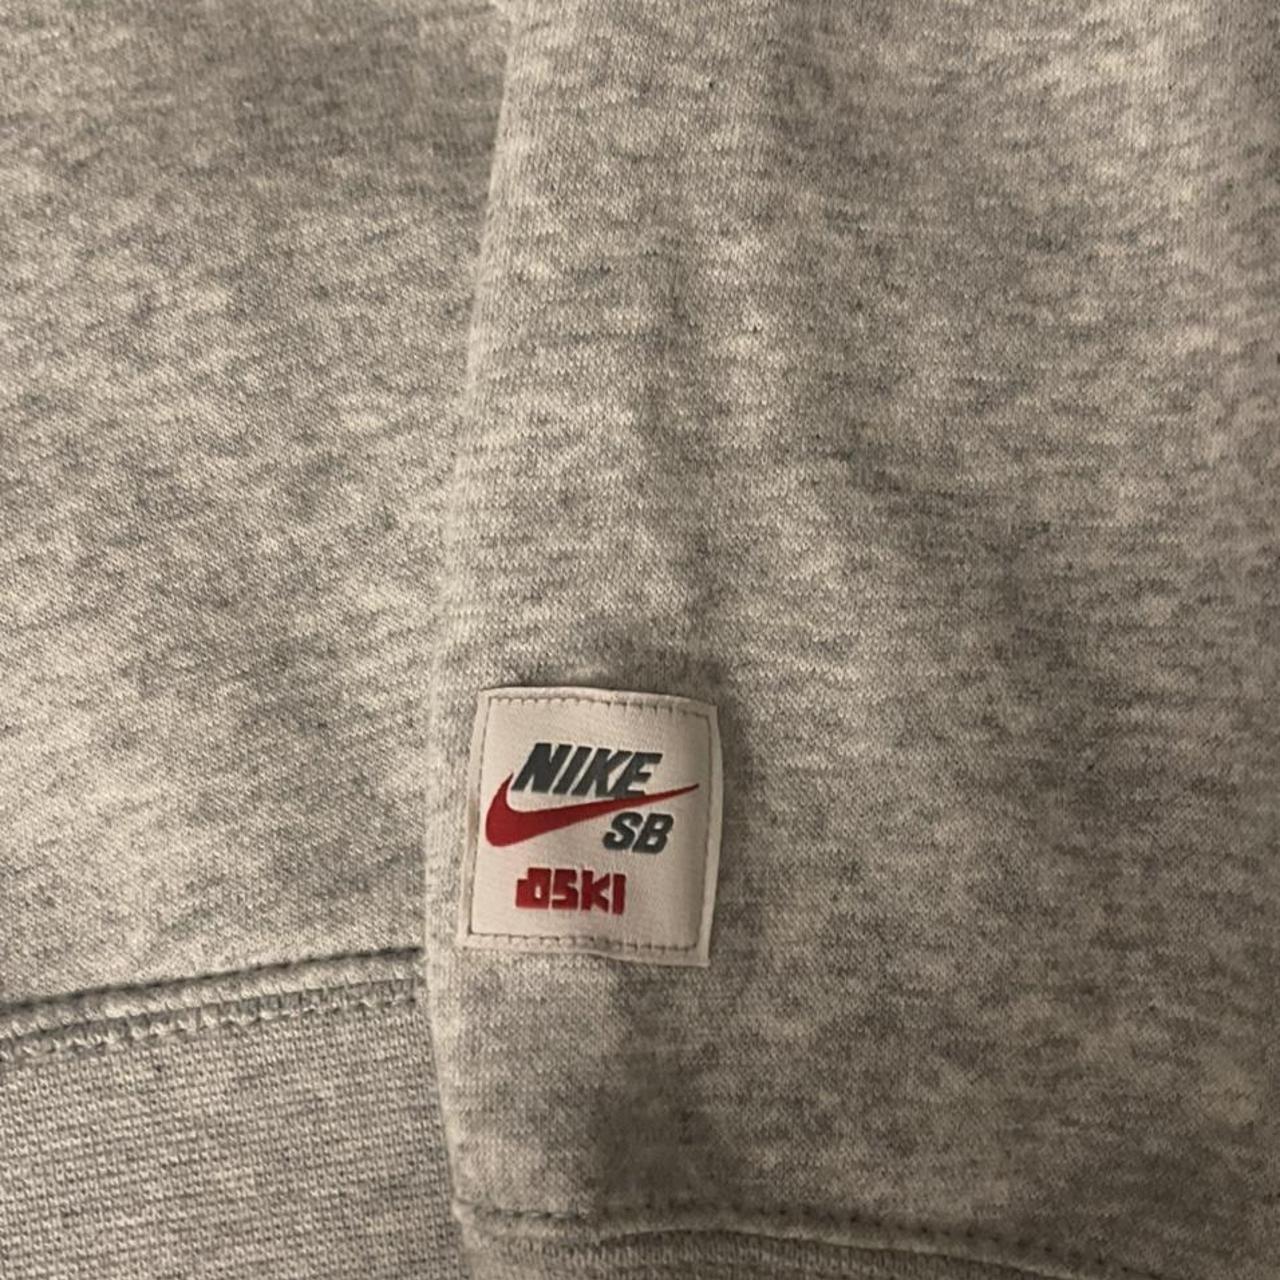 Nike Oski shark hoodie collab. Brand new with tags... - Depop